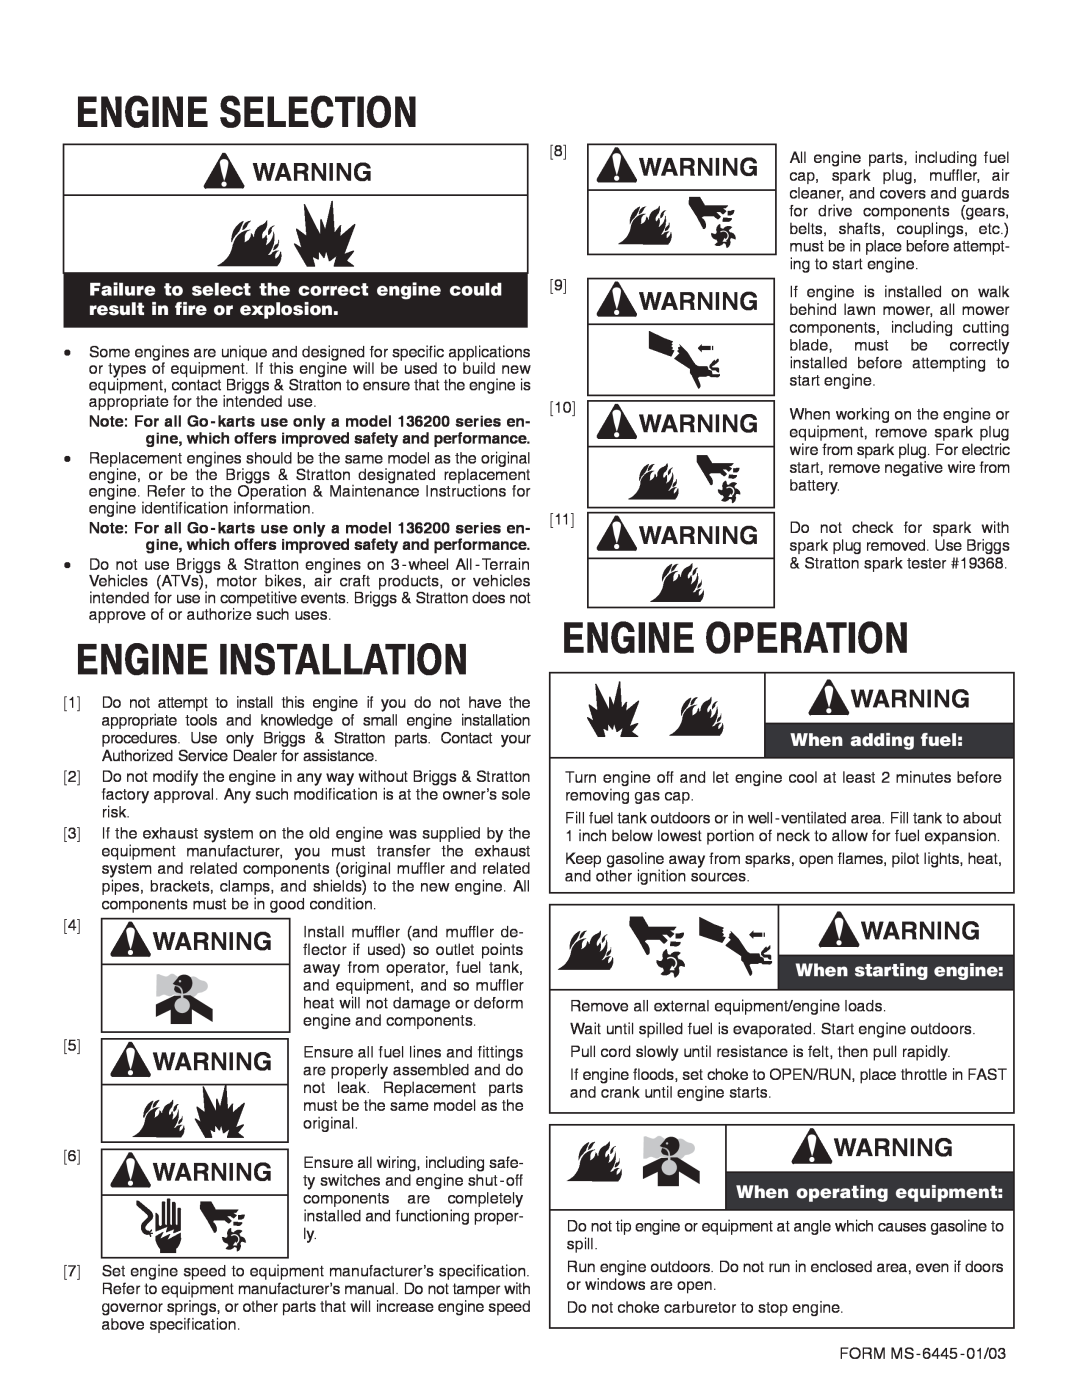 Briggs & Stratton 23FBP Engine Selection, Engine Installation, Engine Operation, When adding fuel, When starting engine 